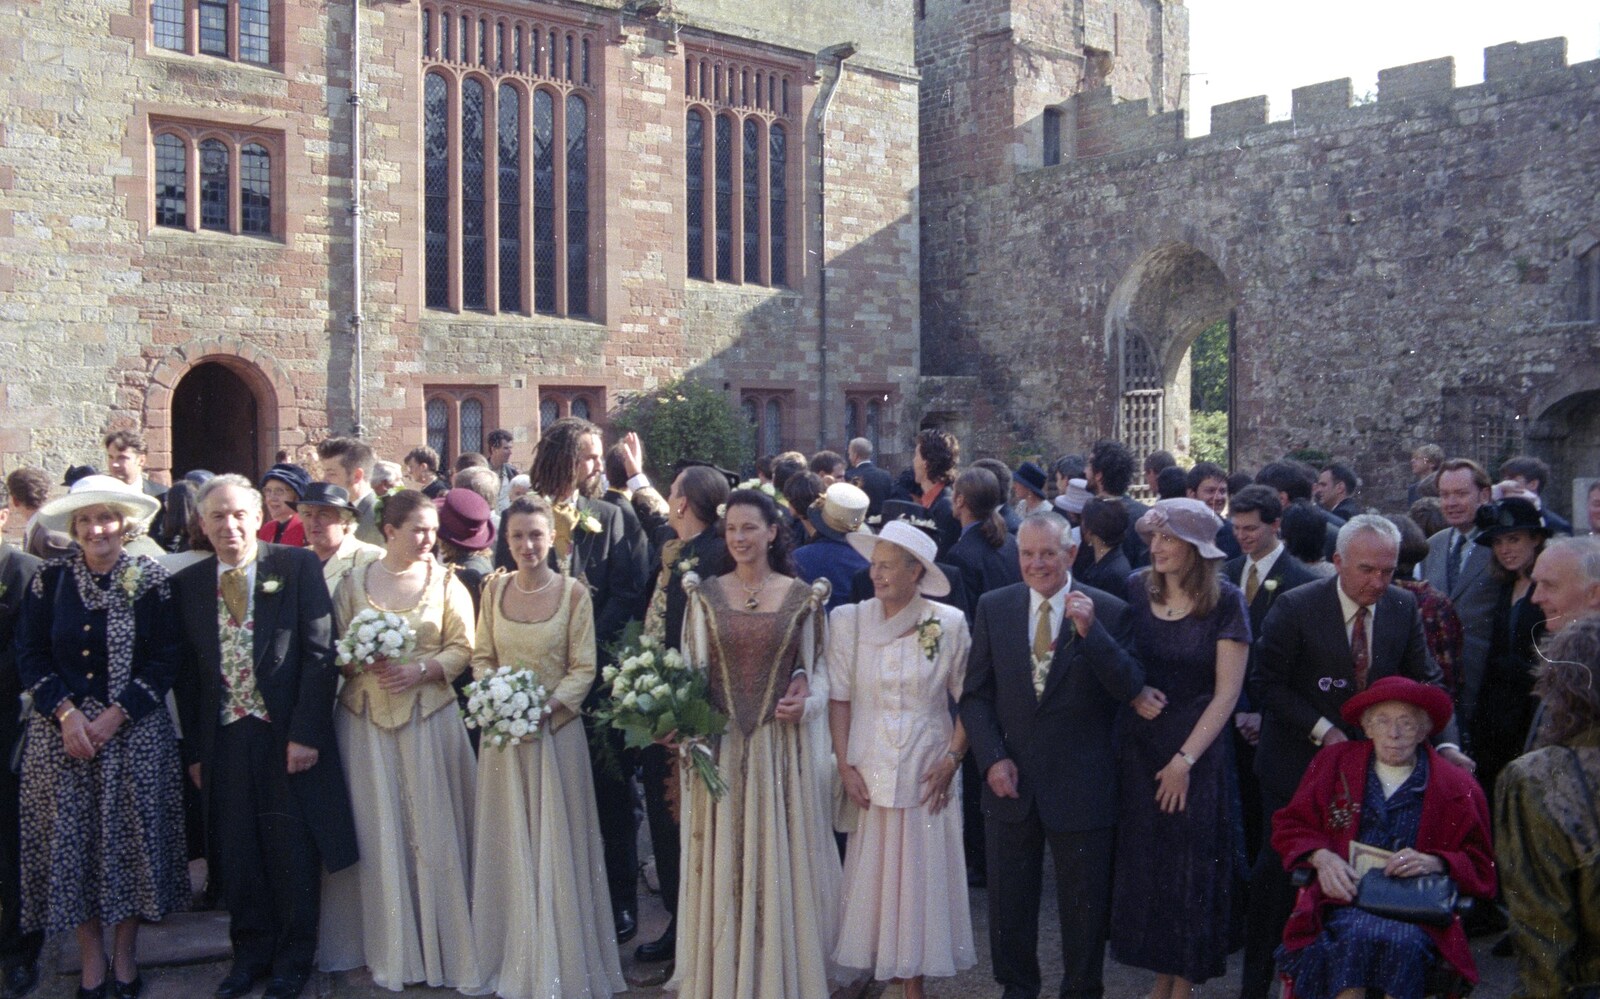 A courtyard gathering from Stuart and Sarah's CISU Wedding, Naworth Castle, Brampton, Cumbria - 21st September 1996